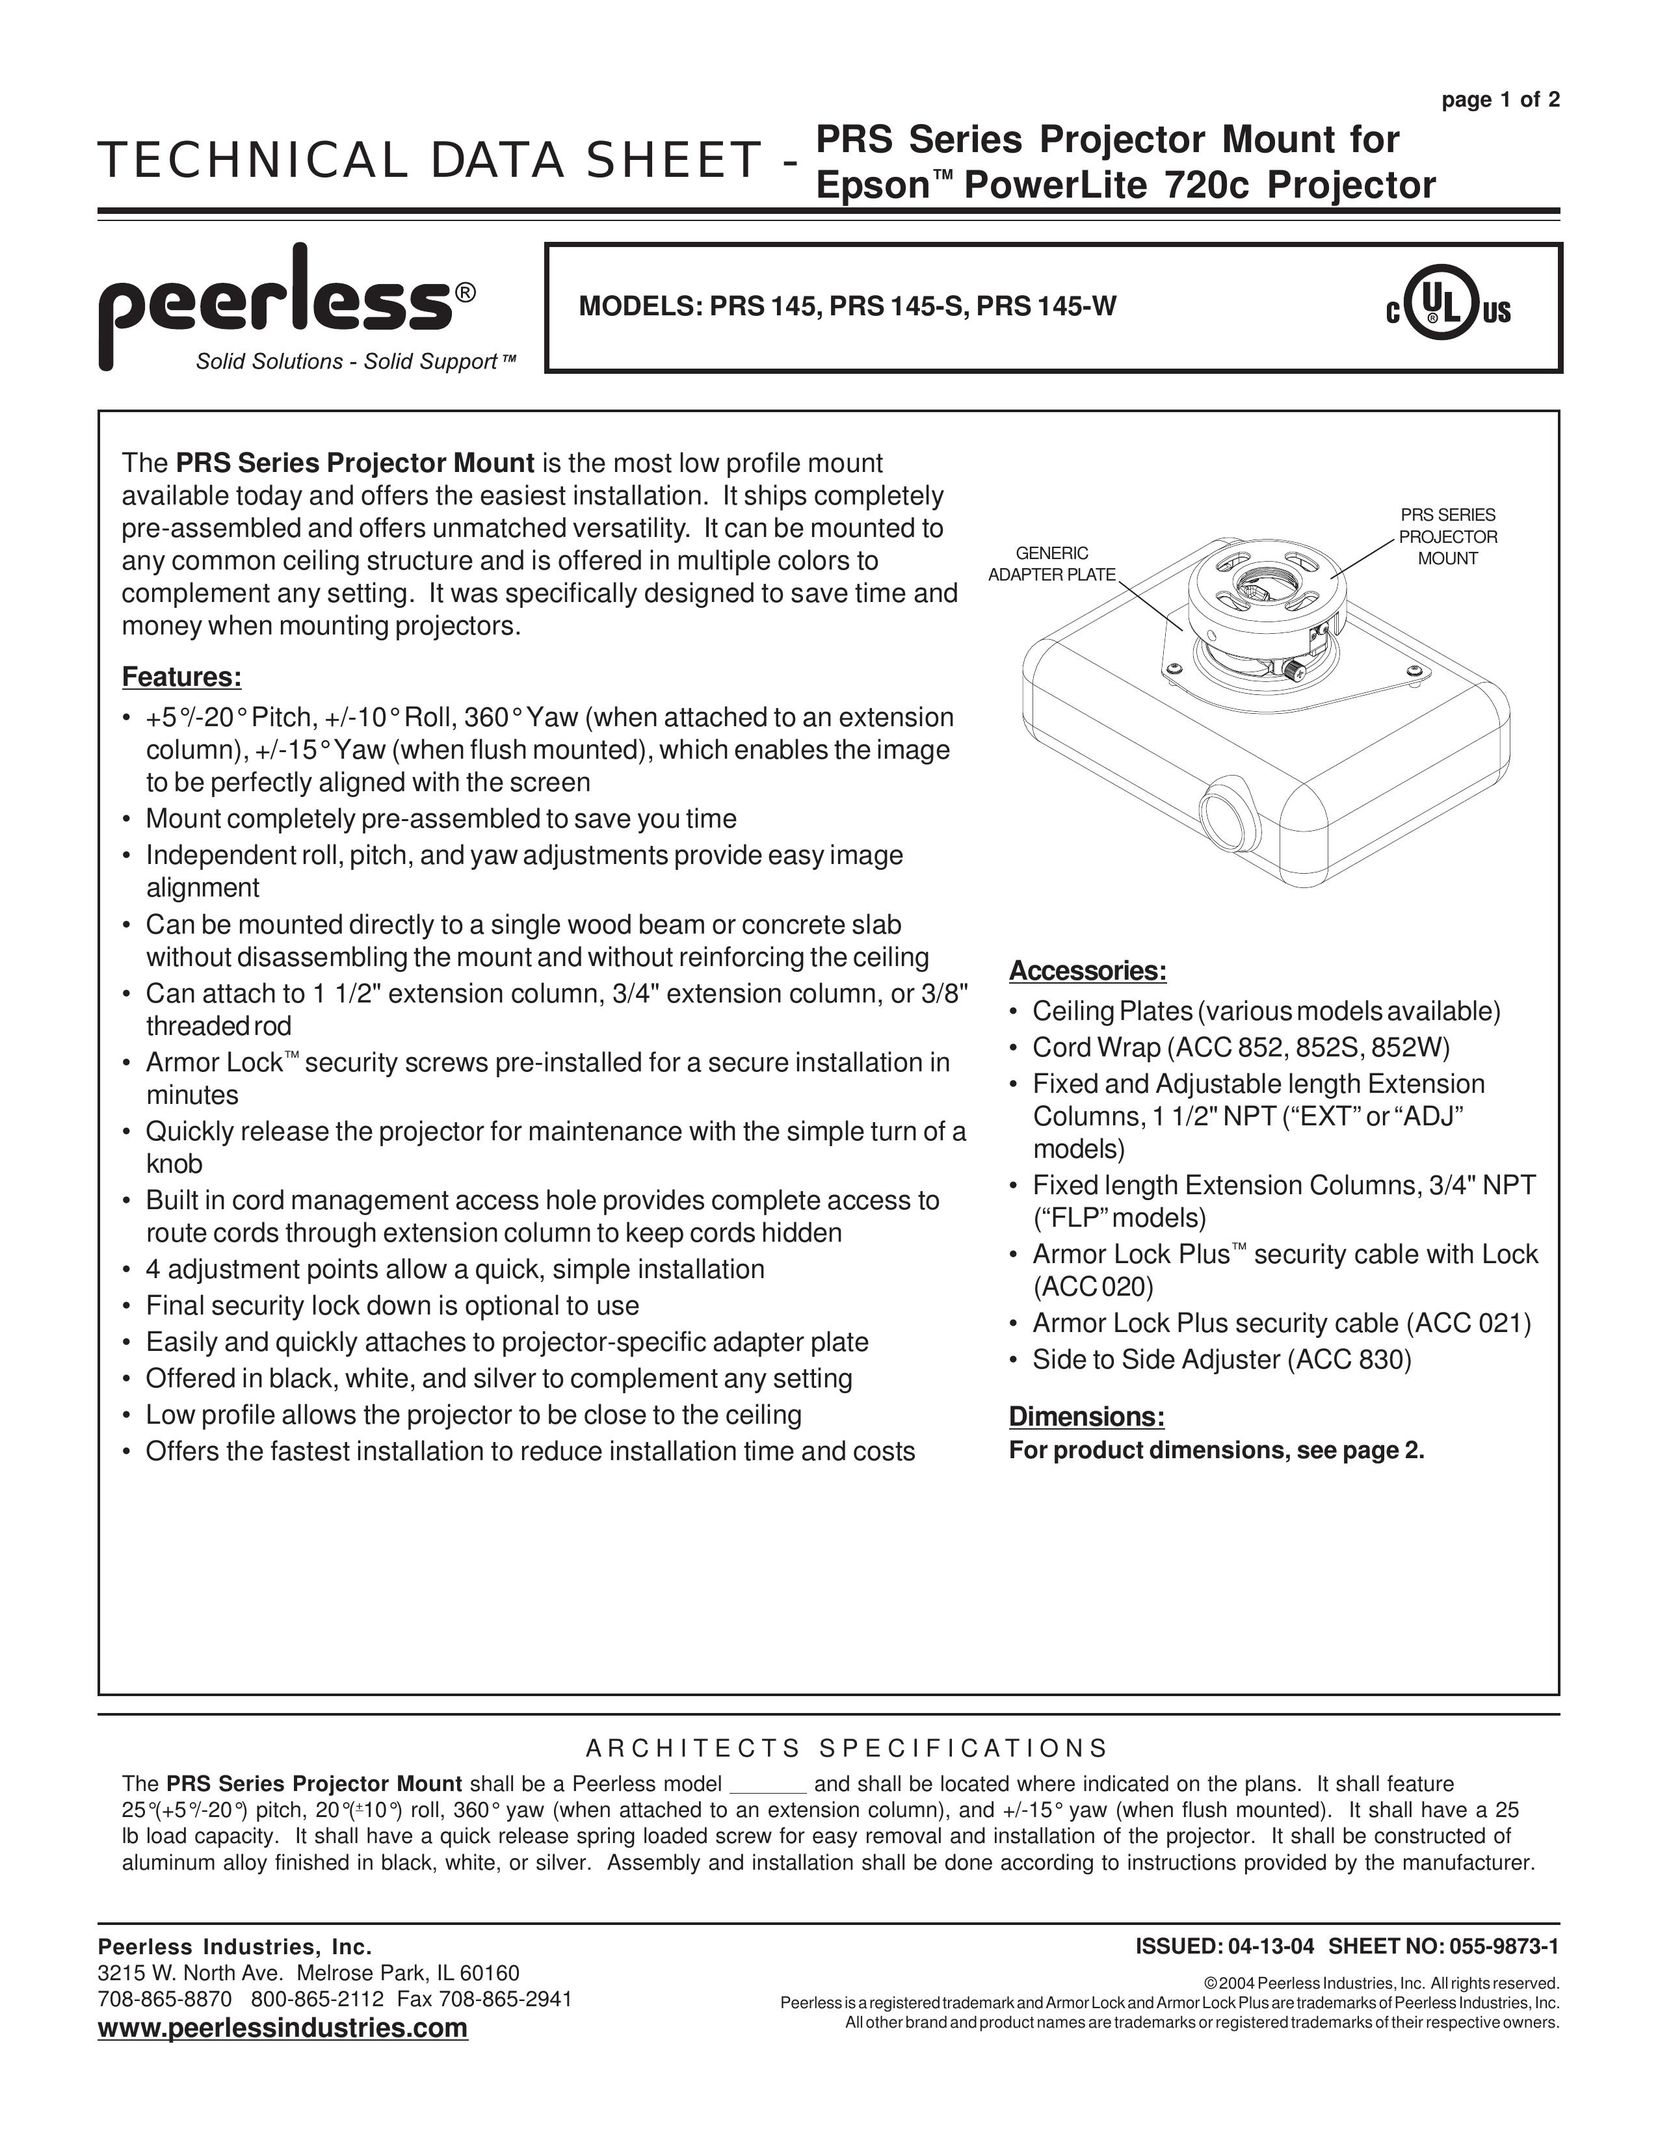 Peerless Industries PRS 145-W Projector Accessories User Manual